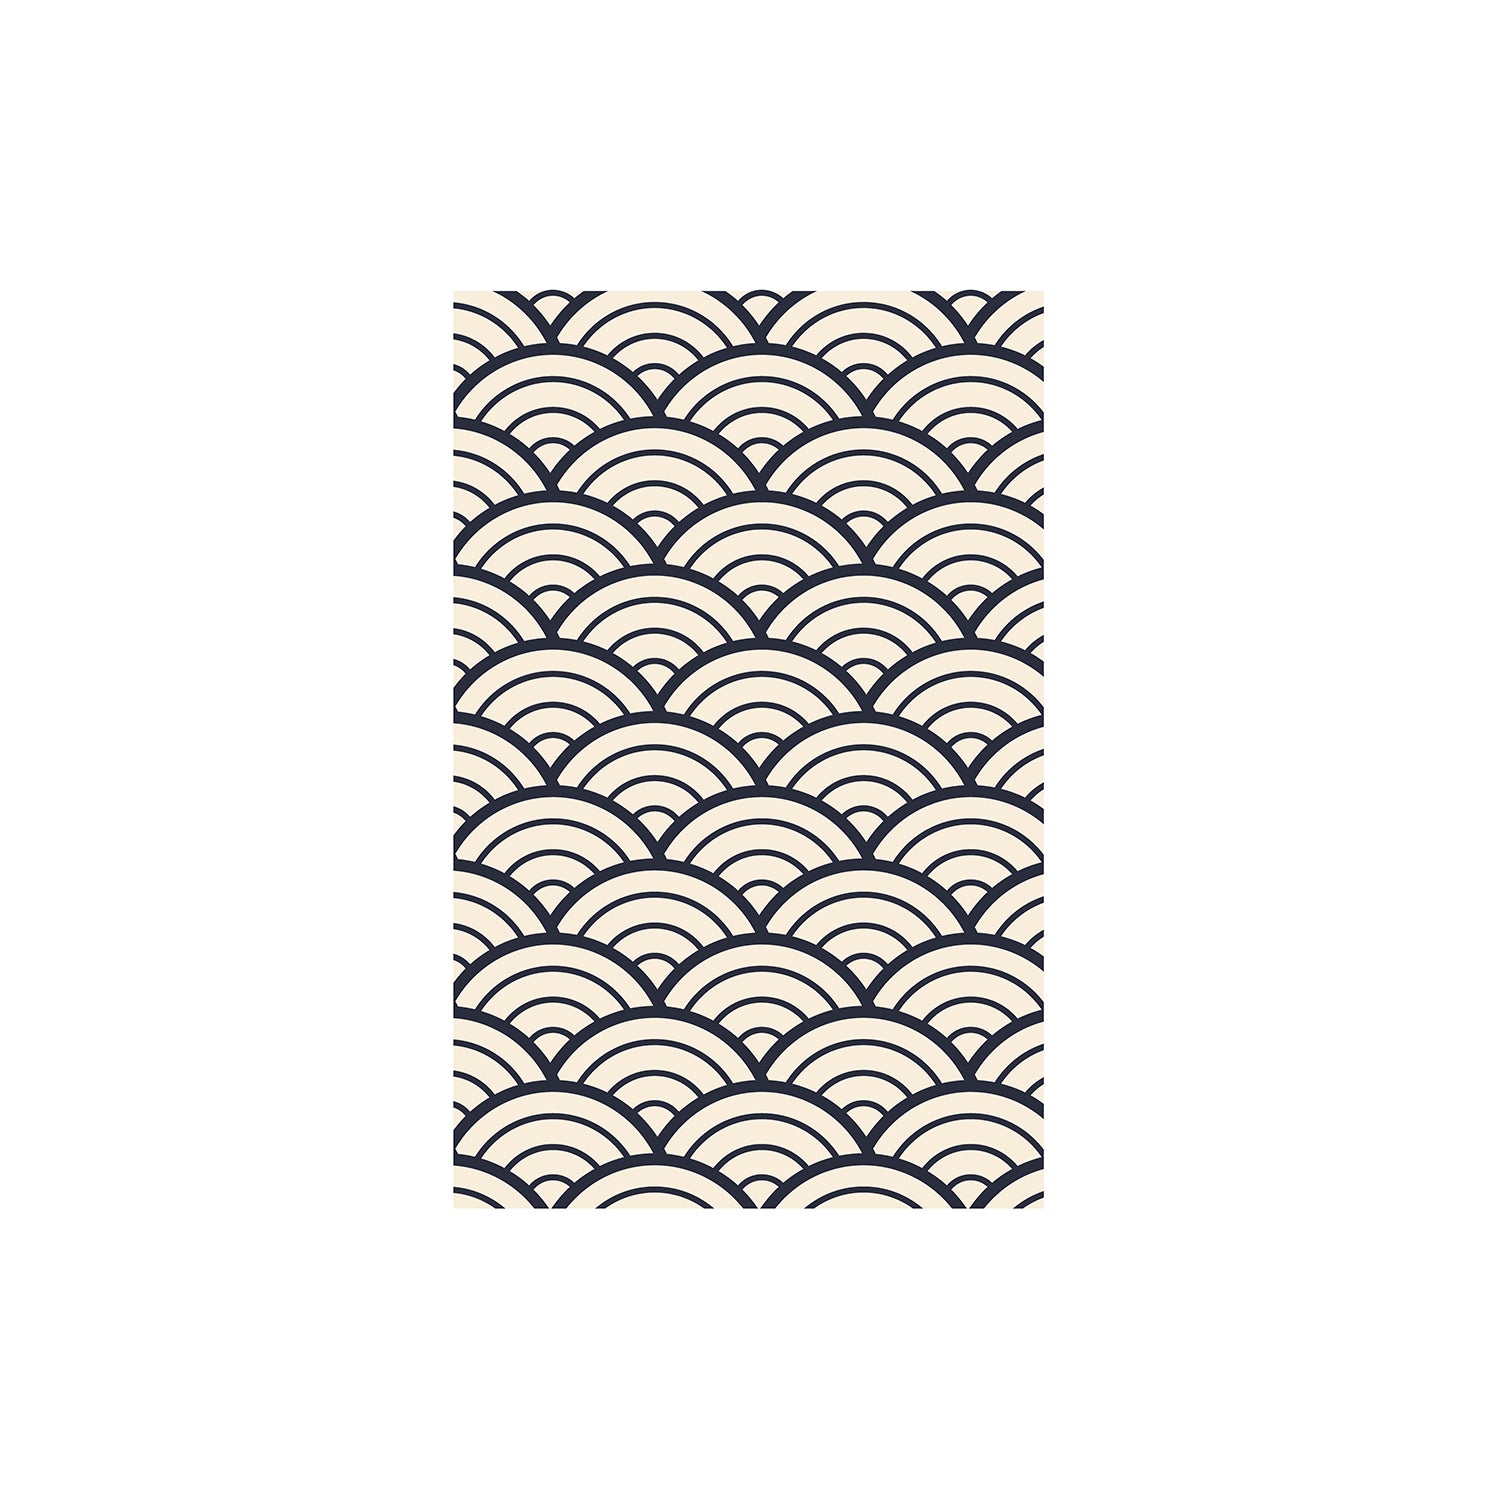 Shunkoen Mamimu Japanese Classic Motifs Mini Memo Notebook | Six Designs Monochrome Waves